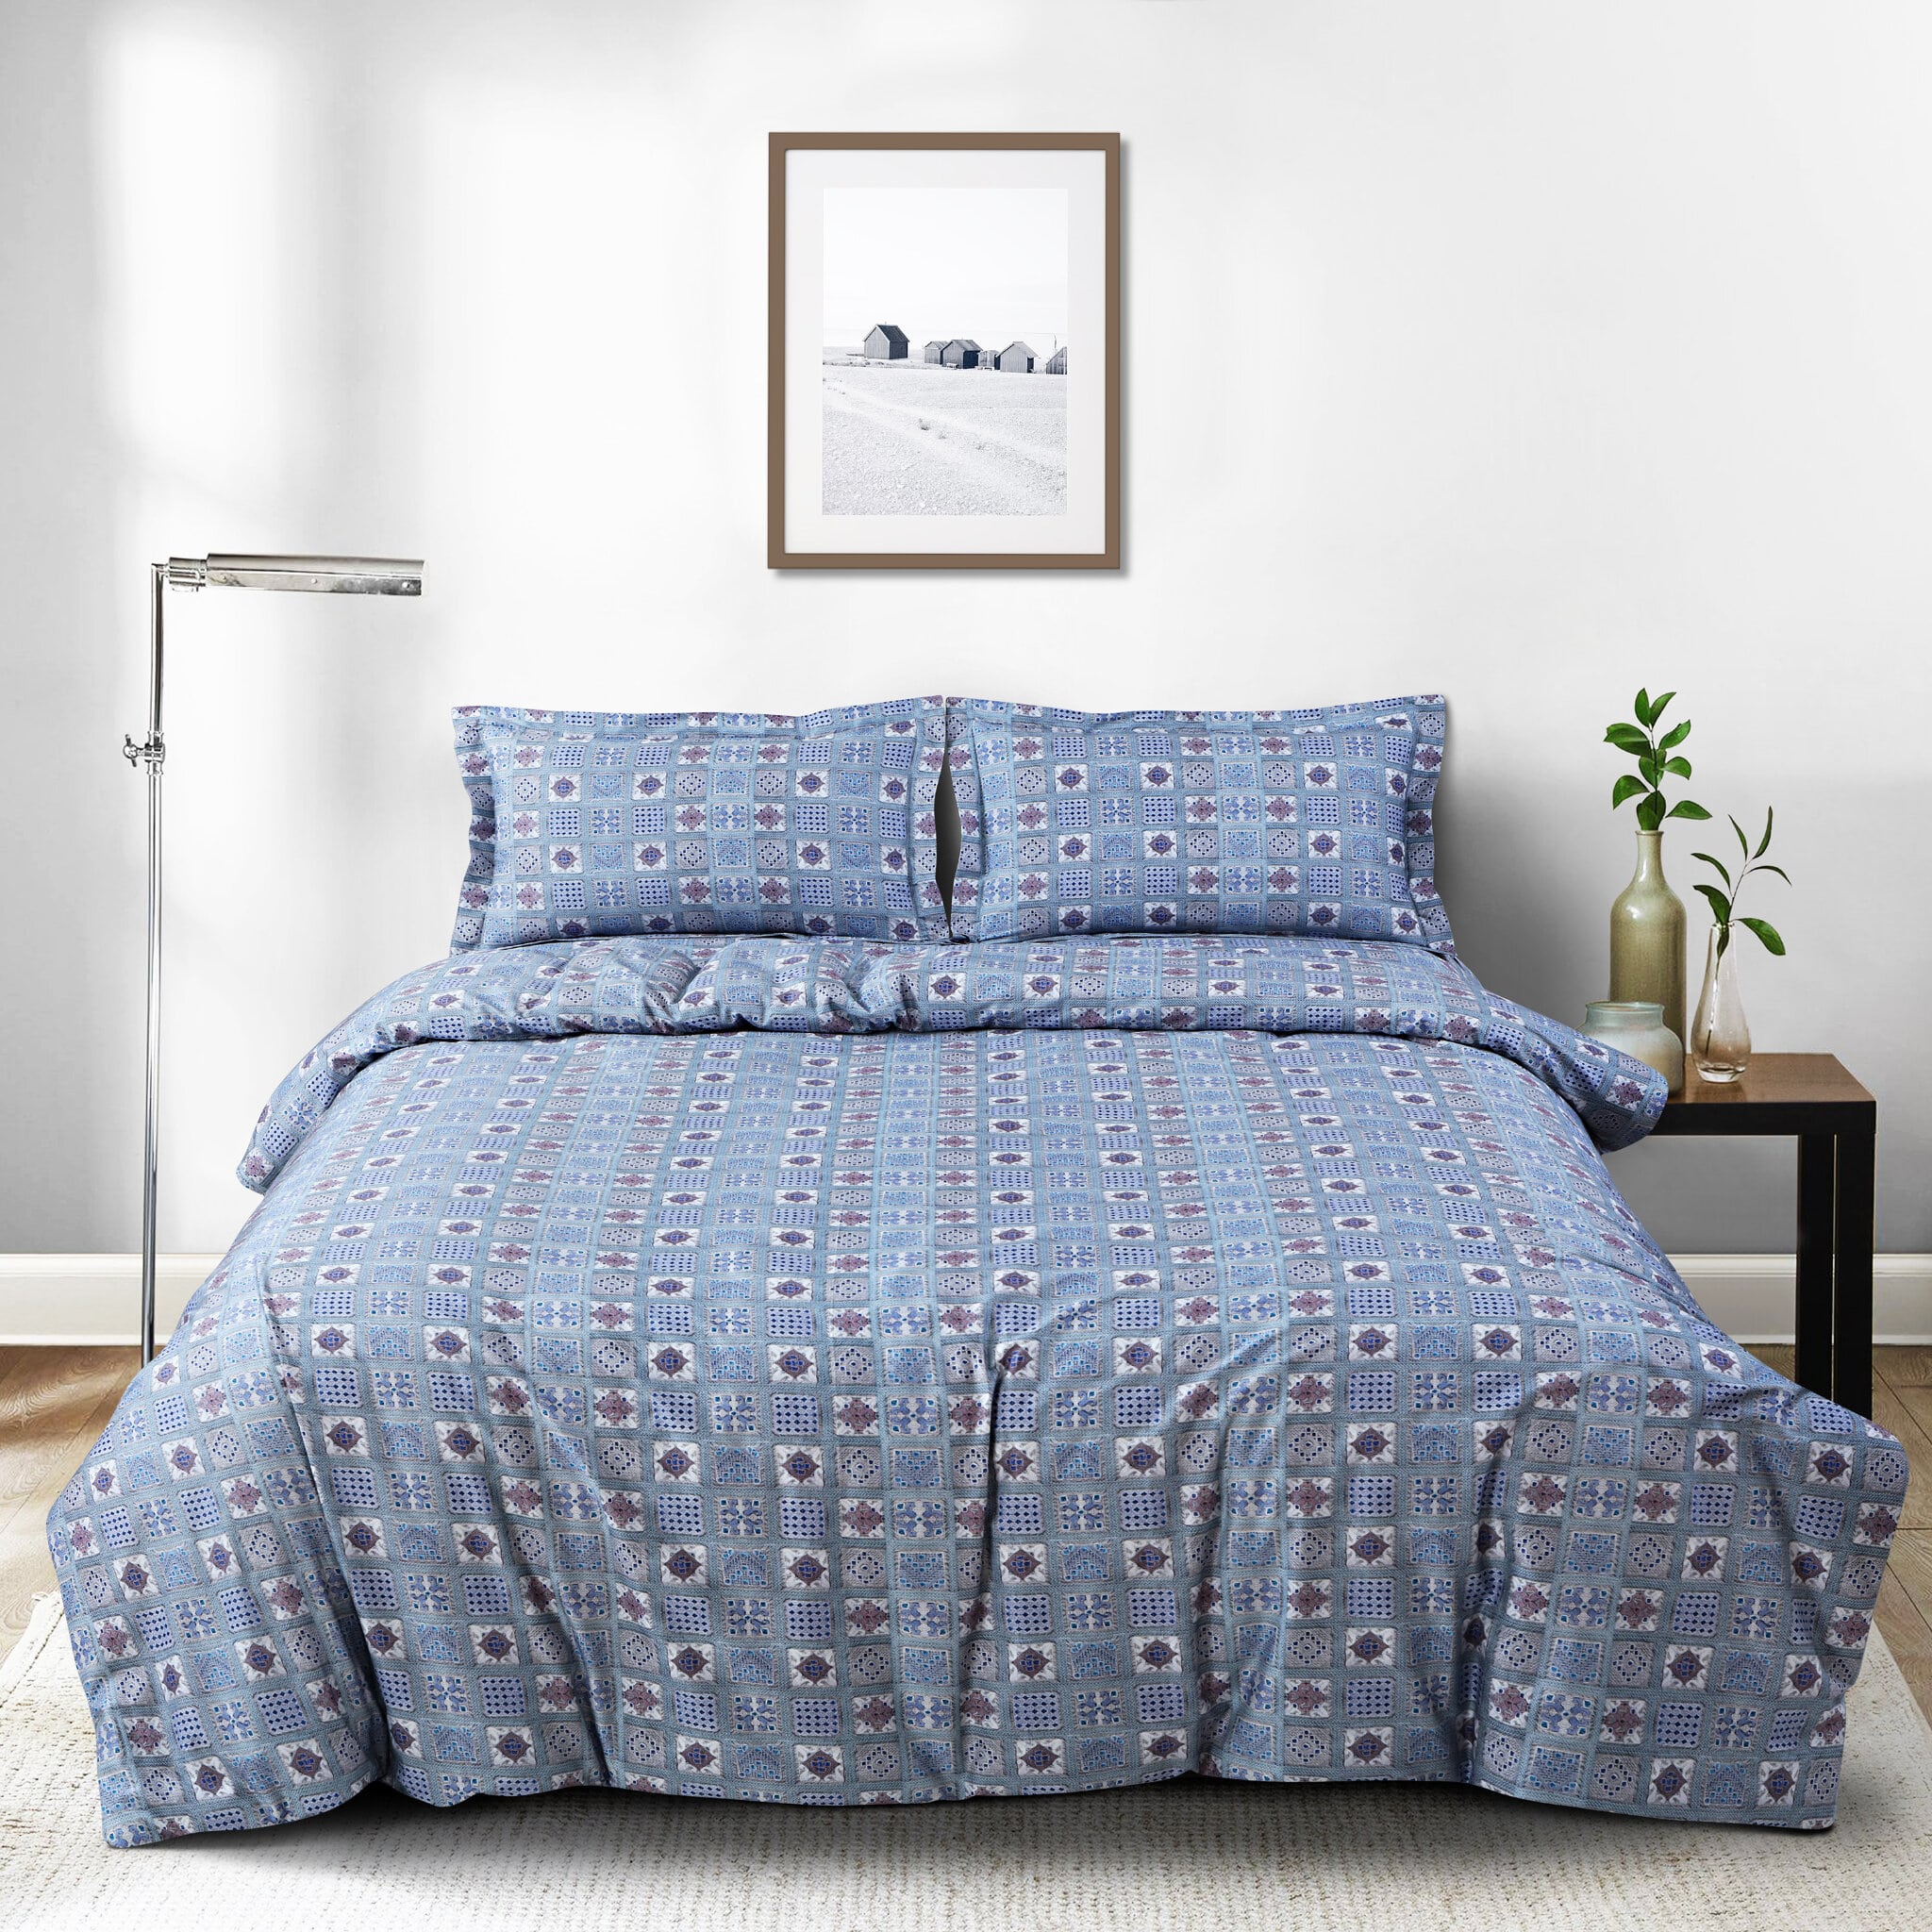 Malako Basel Blue Abstract 350 TC 100% Cotton King Size Bedsheet/Duvet Cover